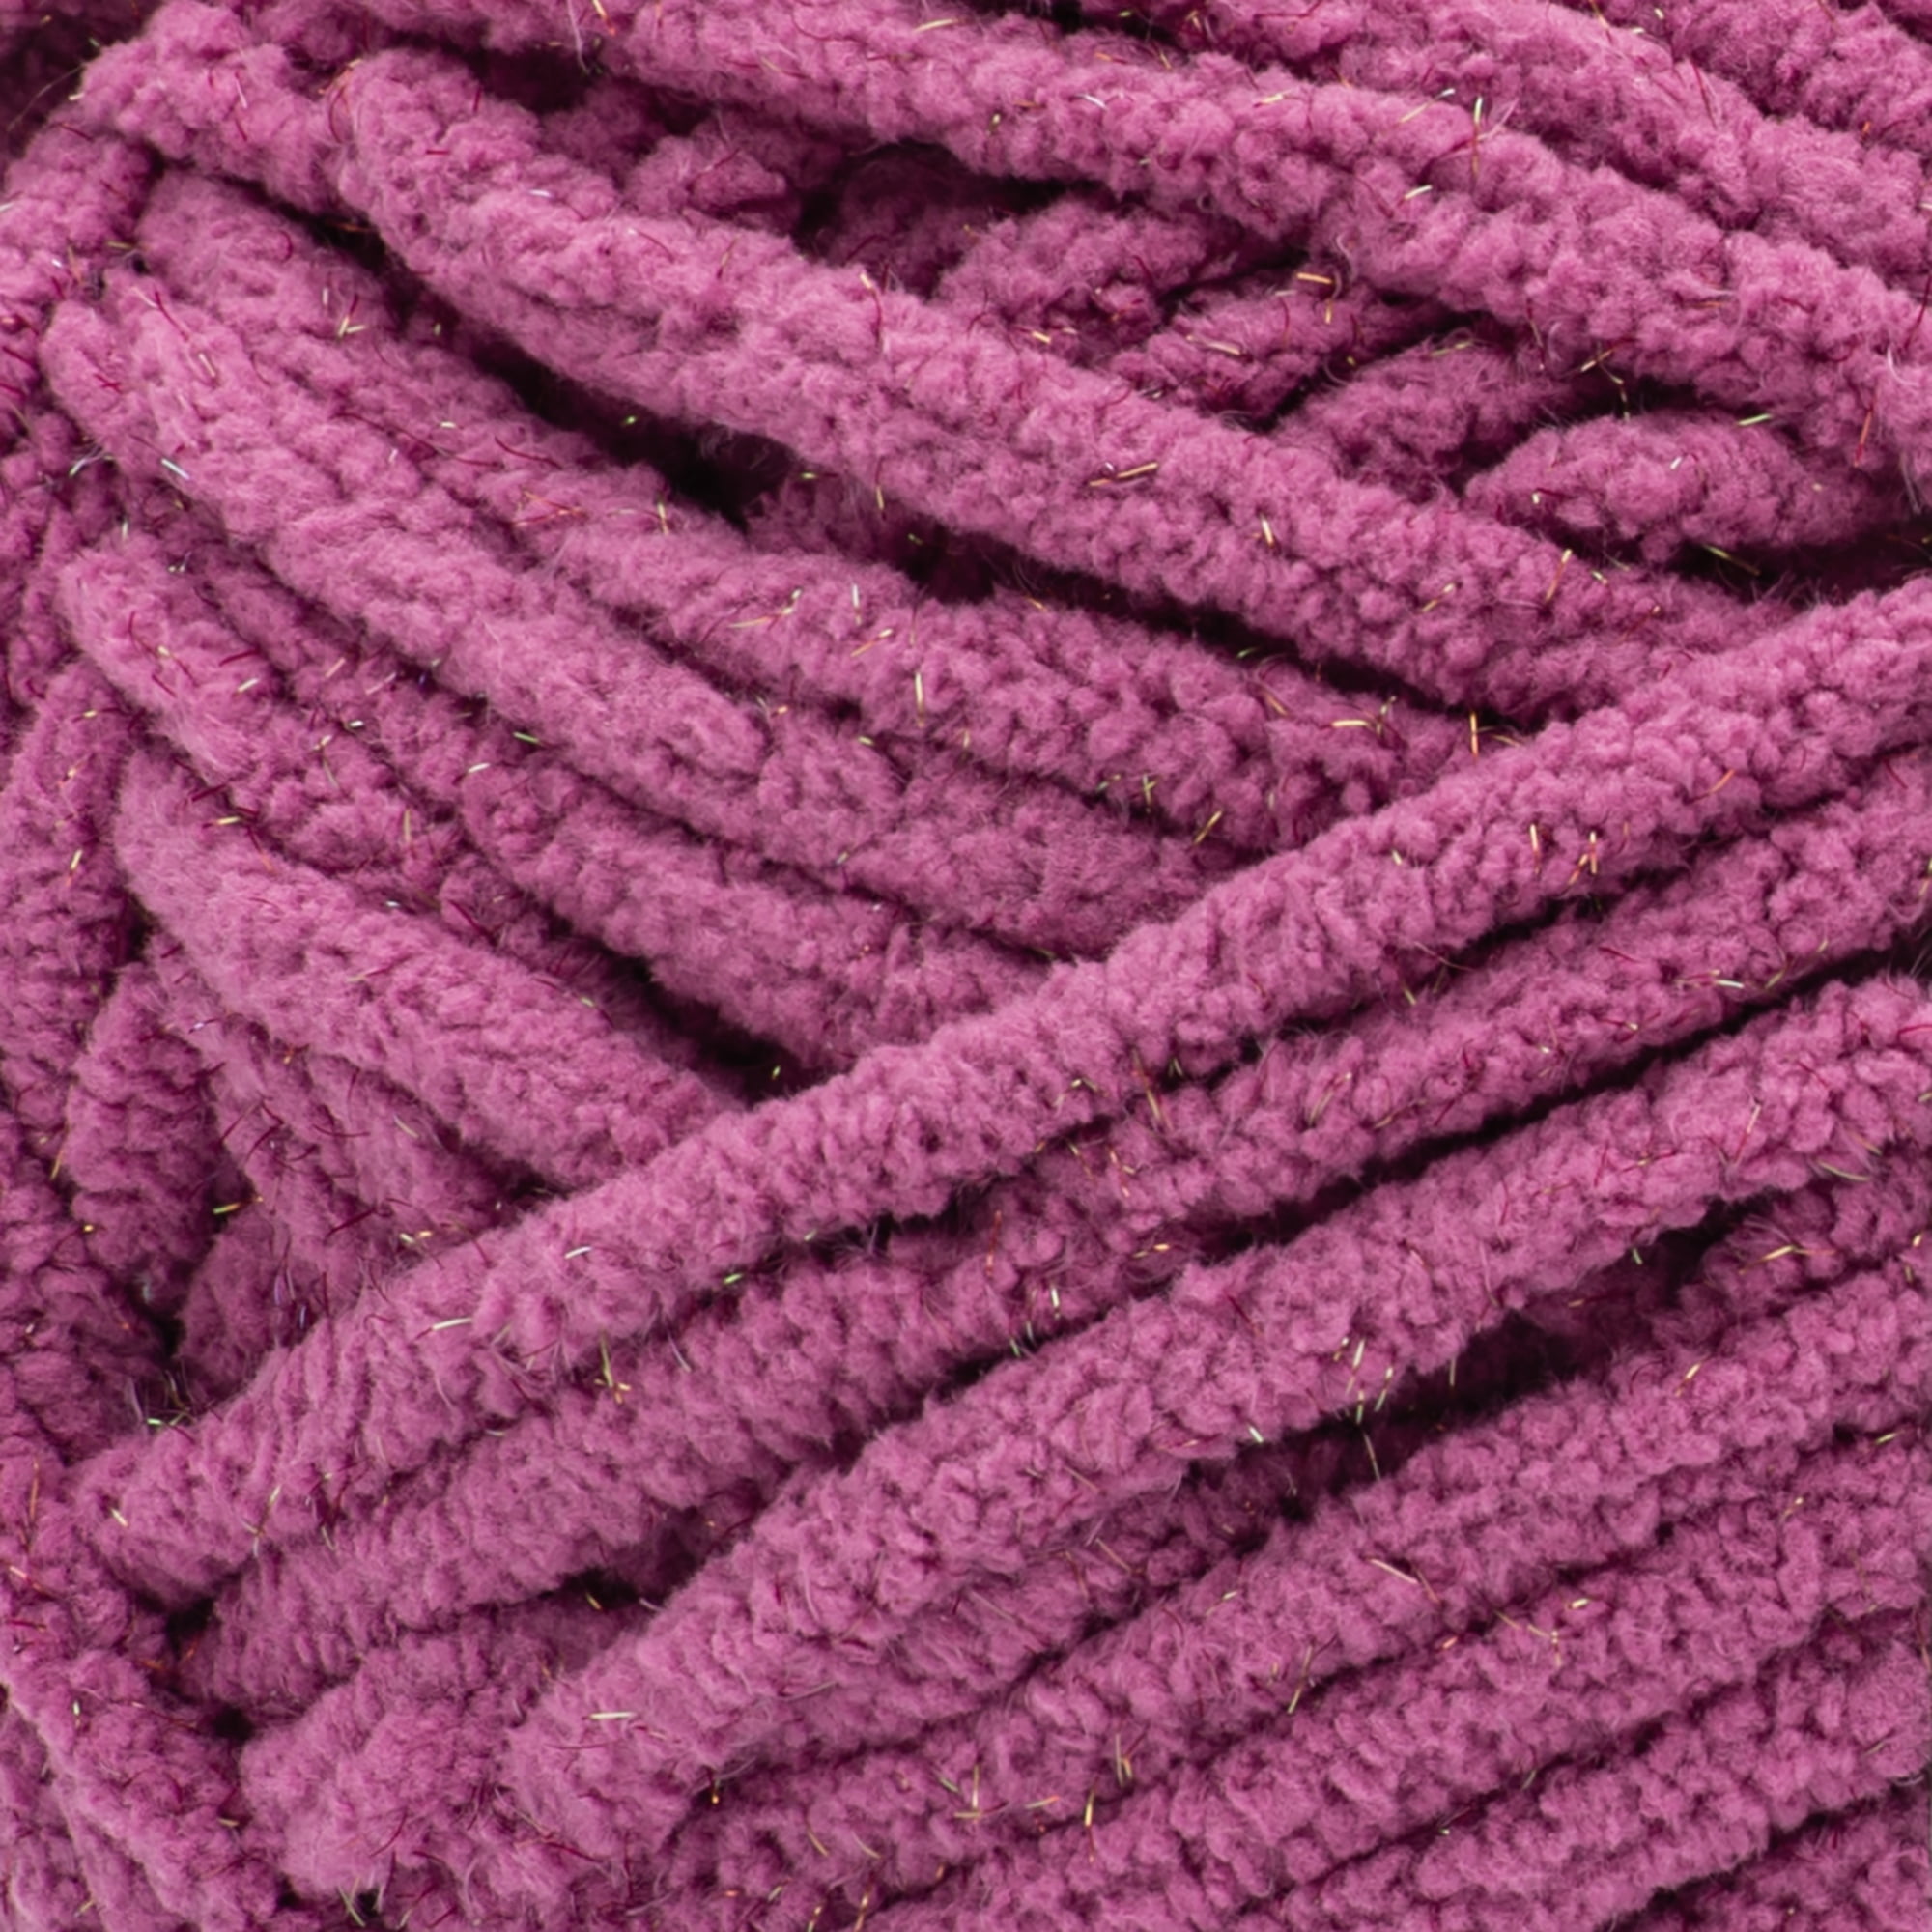 Bernat Blanket Yarn (03200) Baby Pink, Each, Light Garnet